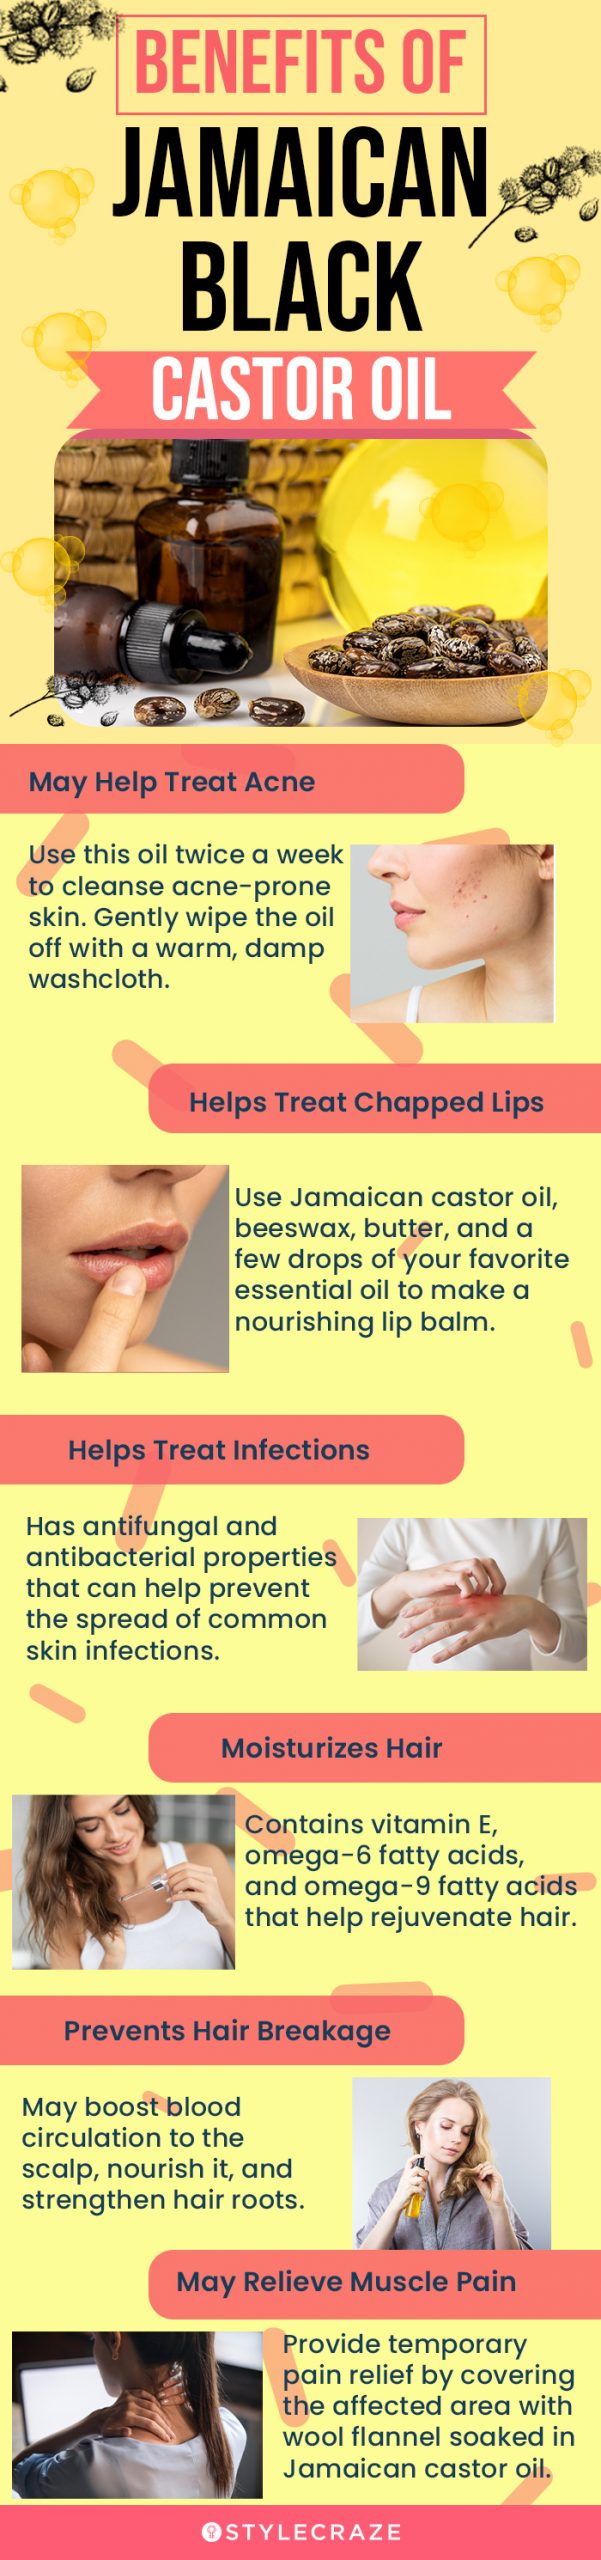 benefits of jamaican black castor oil (infographic)